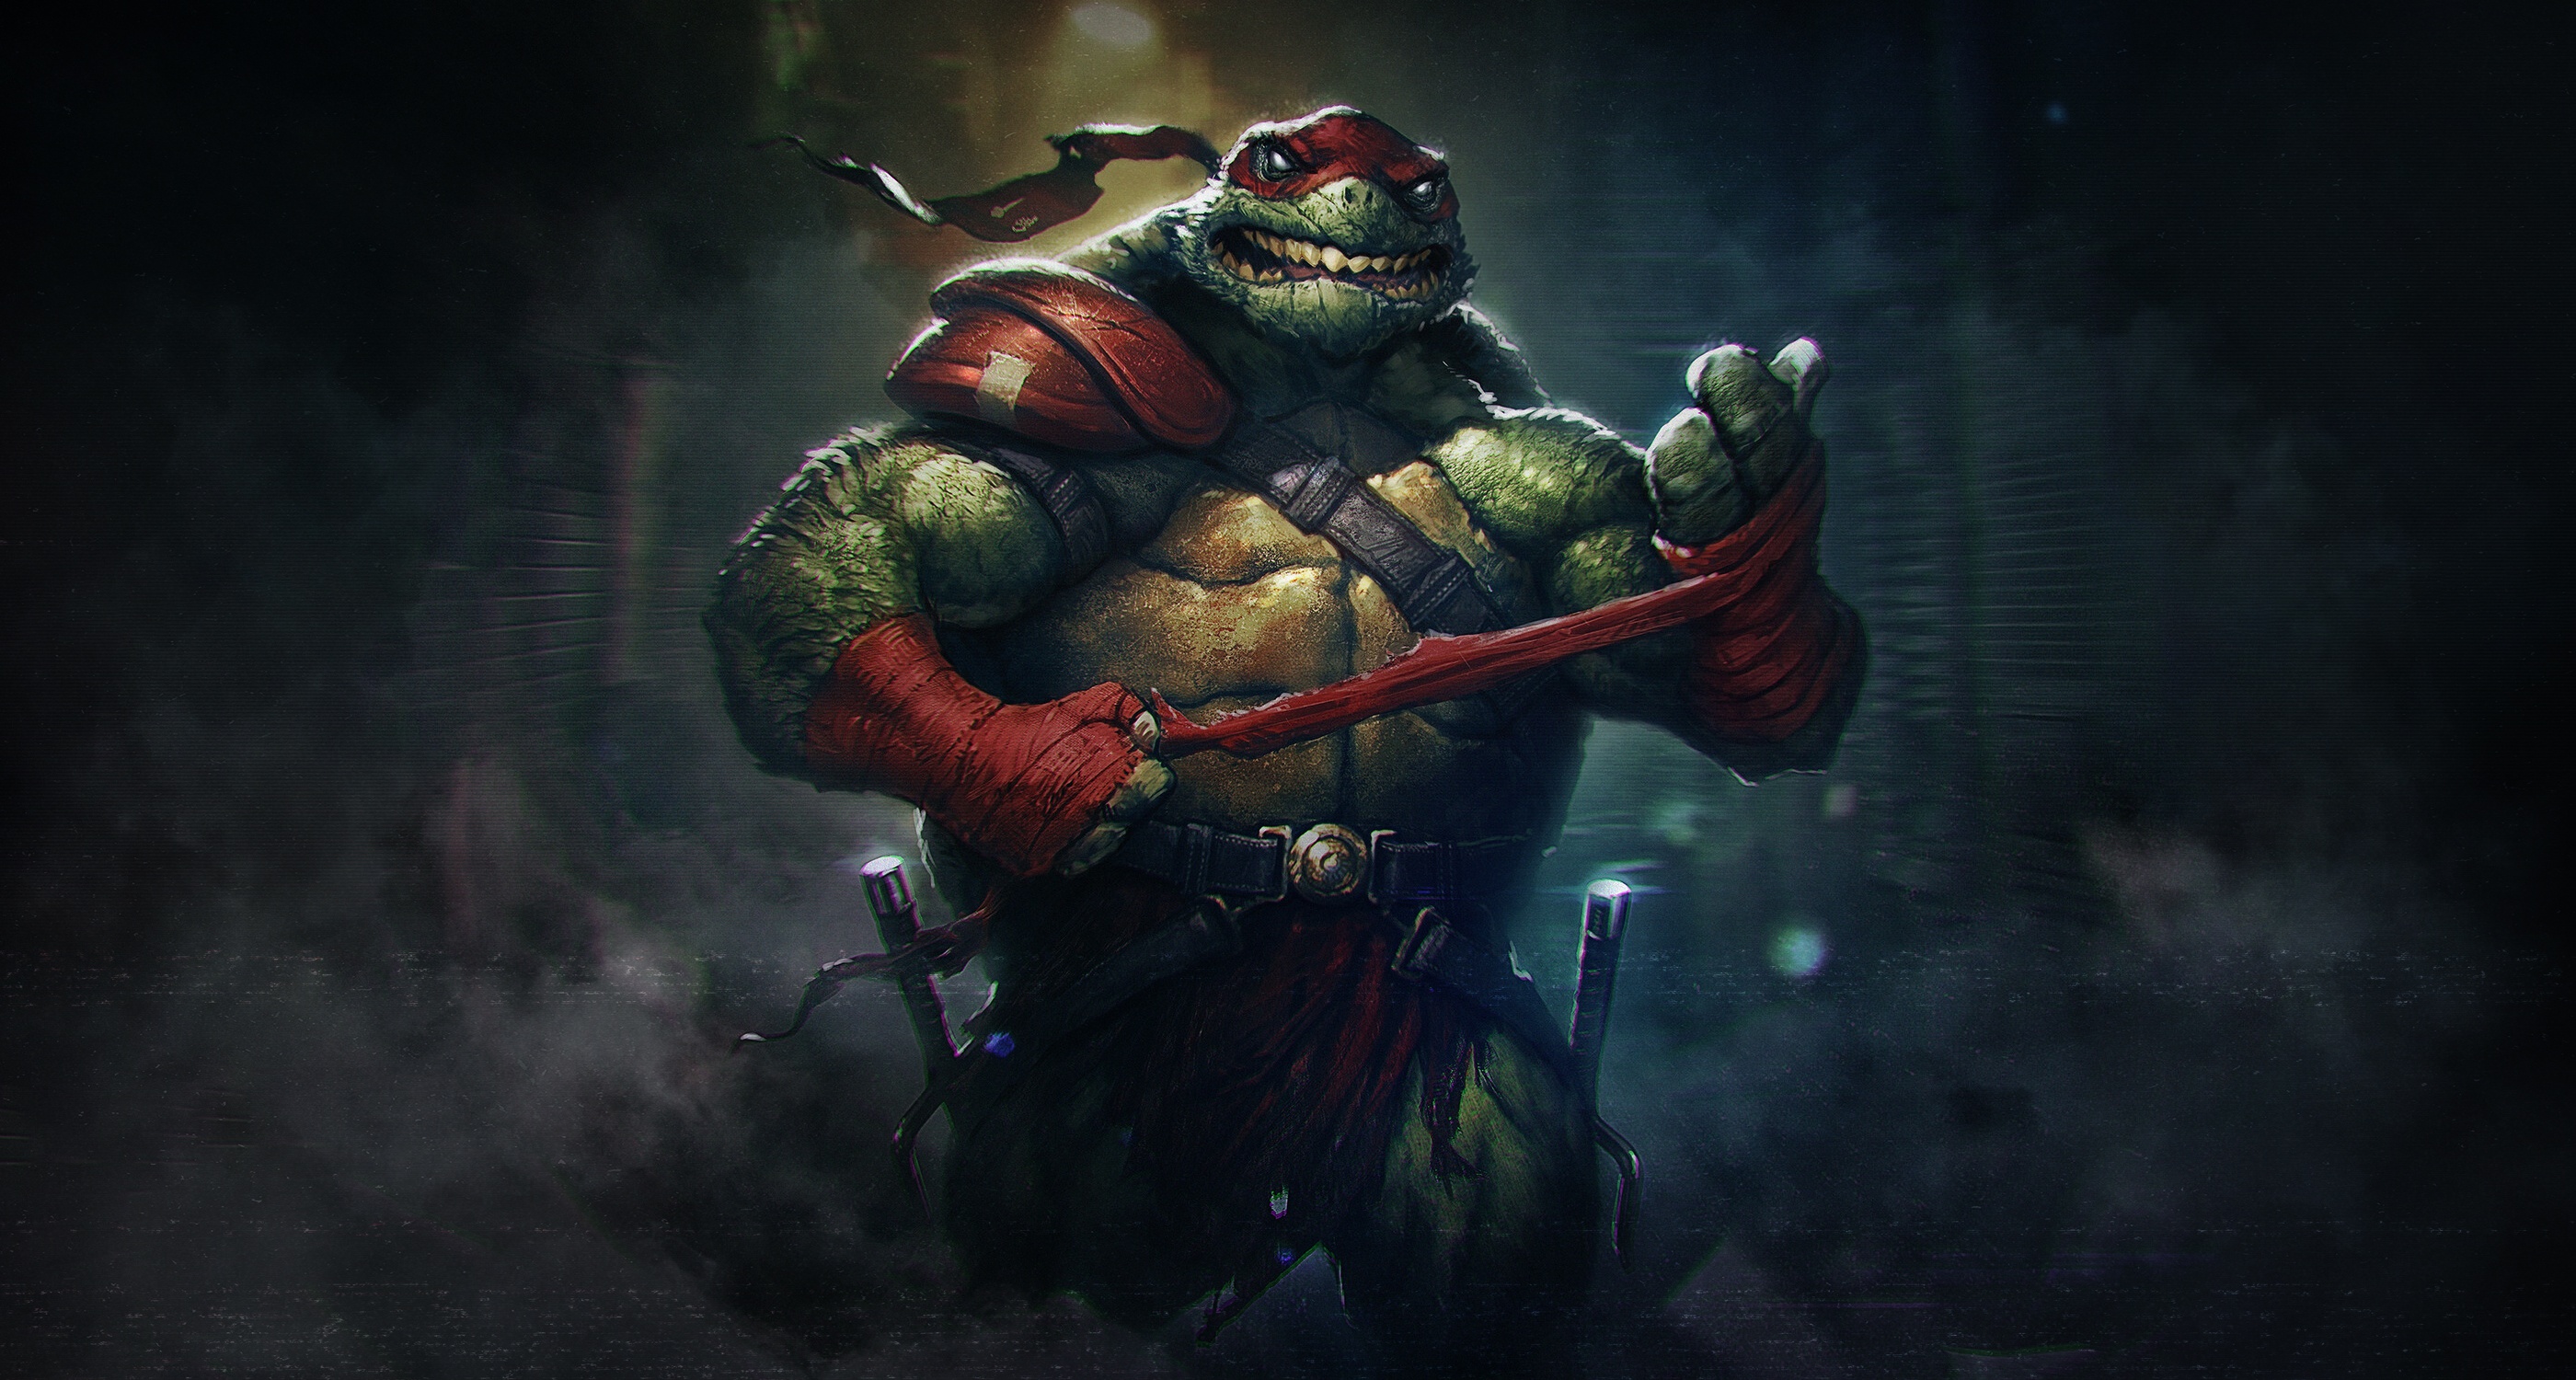 General 2800x1500 Alex Borsuk Teenage Mutant Ninja Turtles fantasy art warrior artwork Rafael (TMNT)